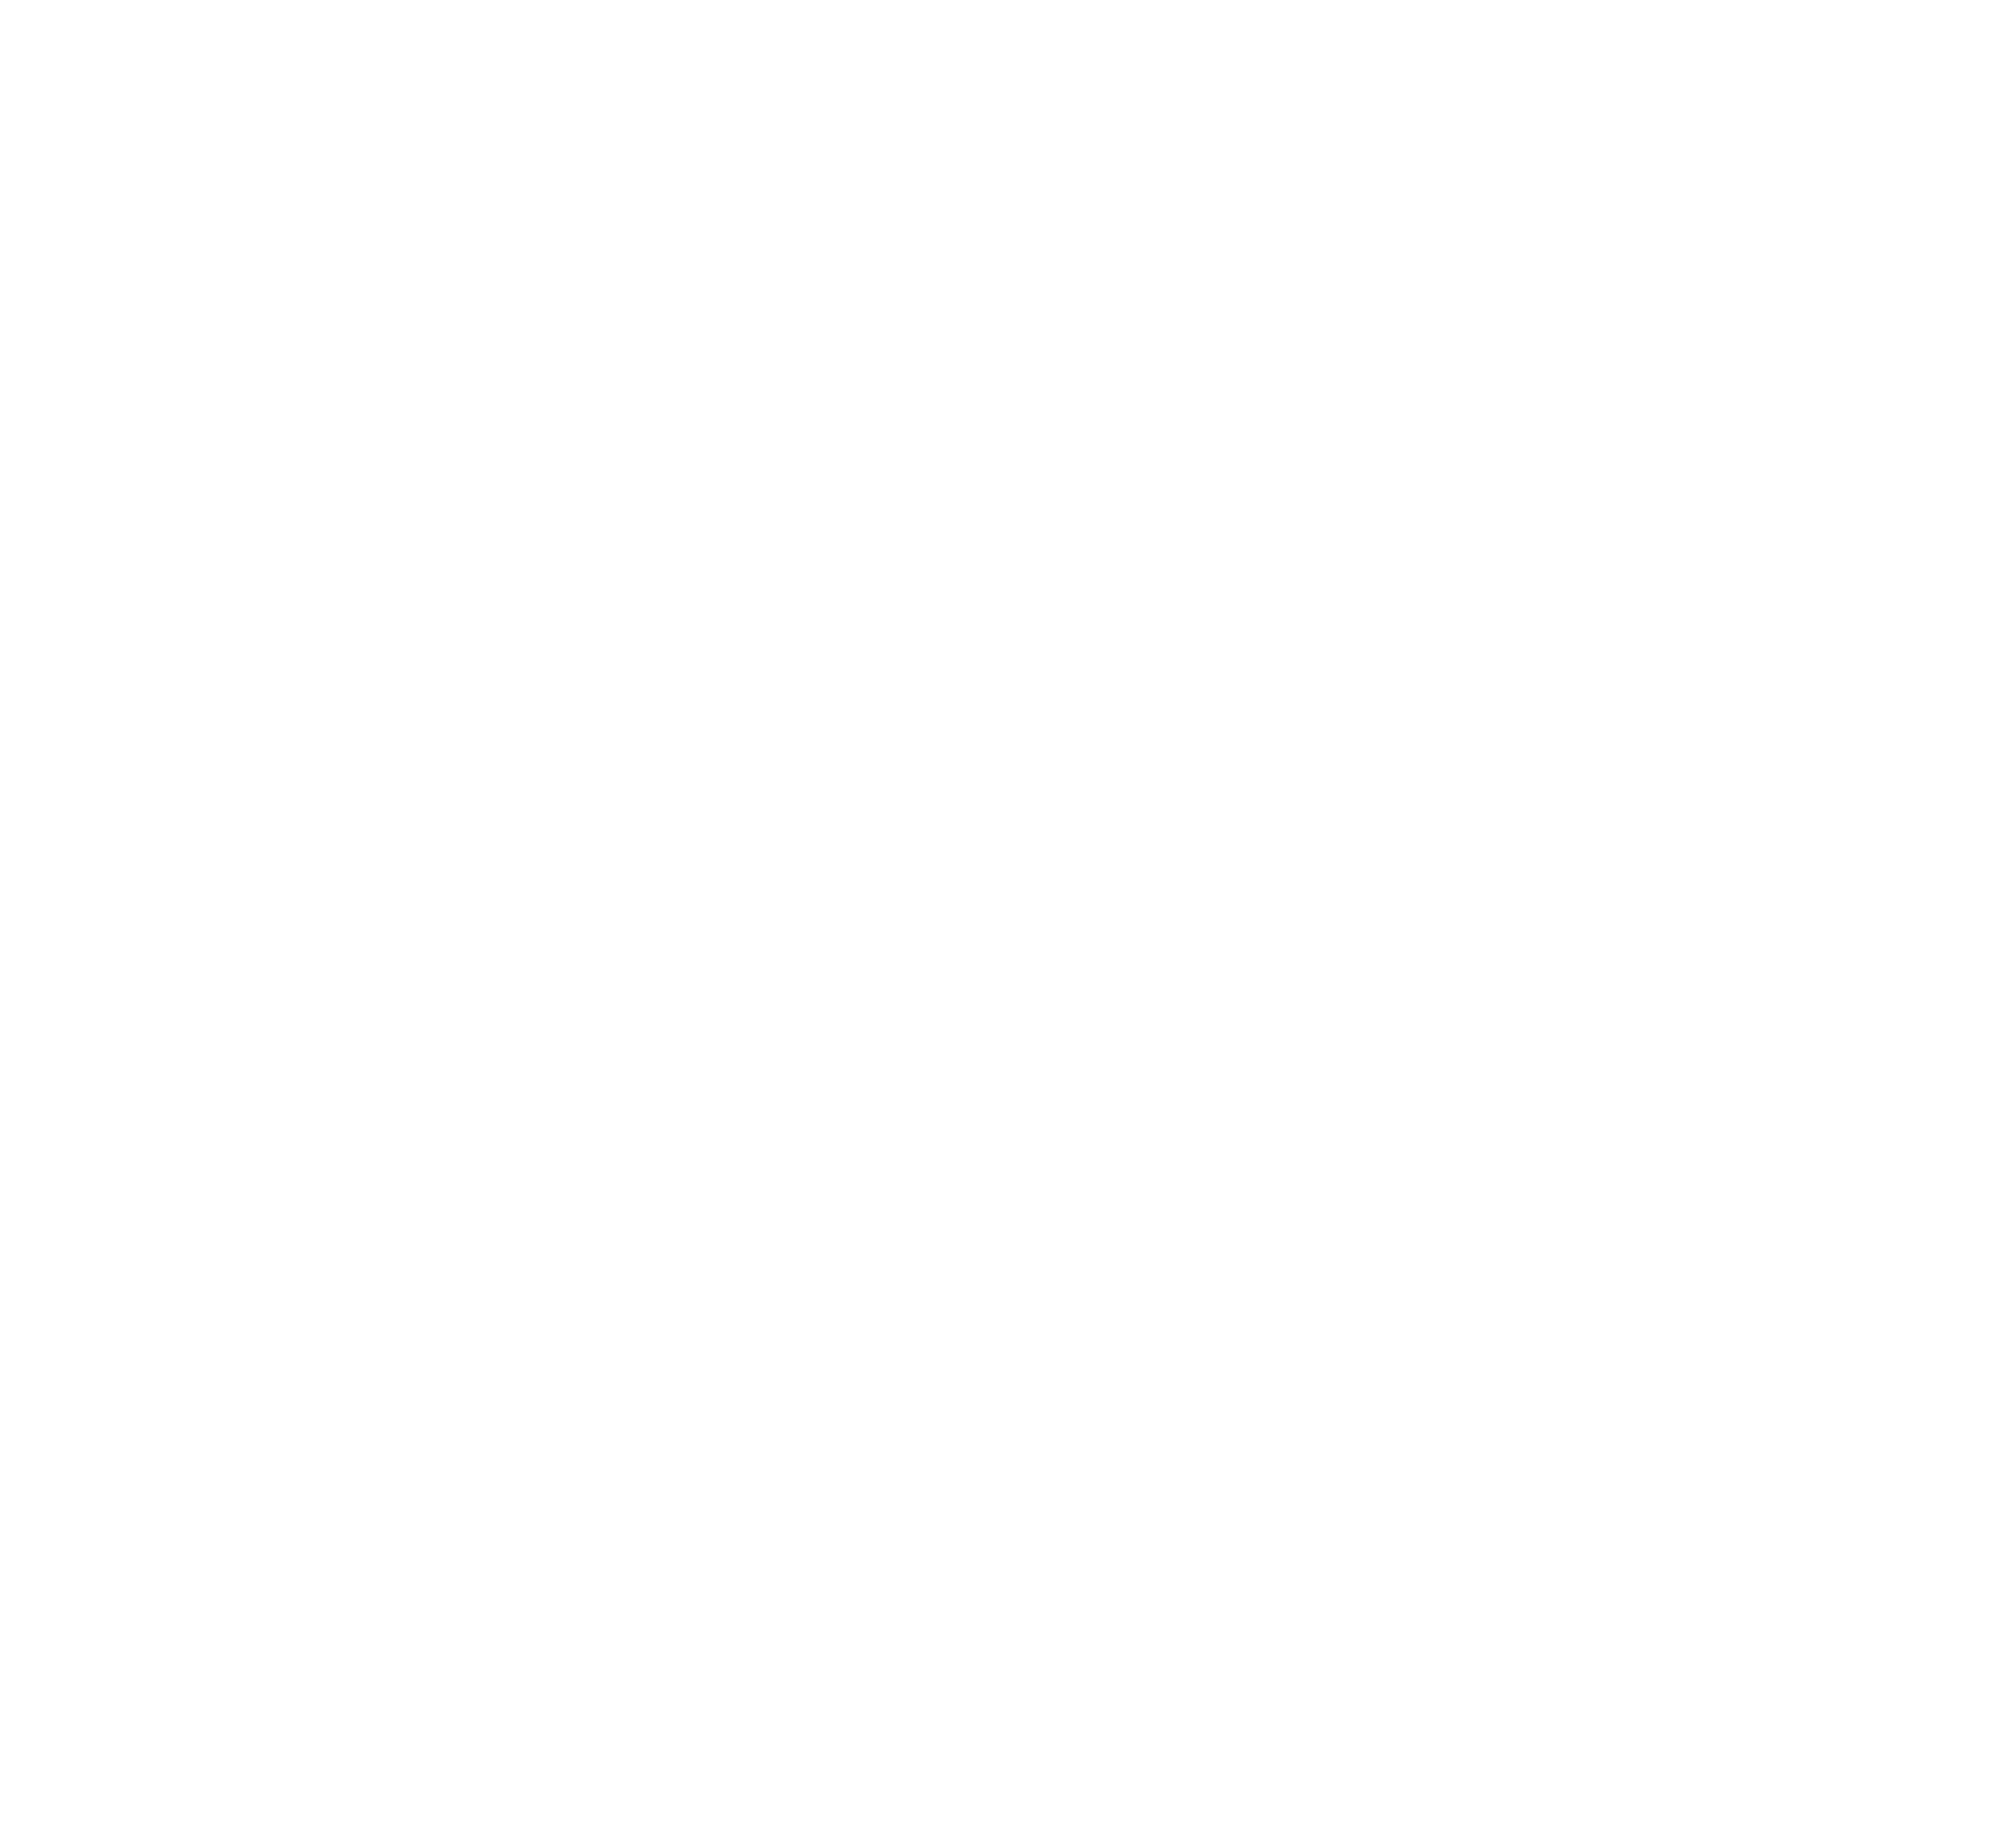 SES Space & Defense